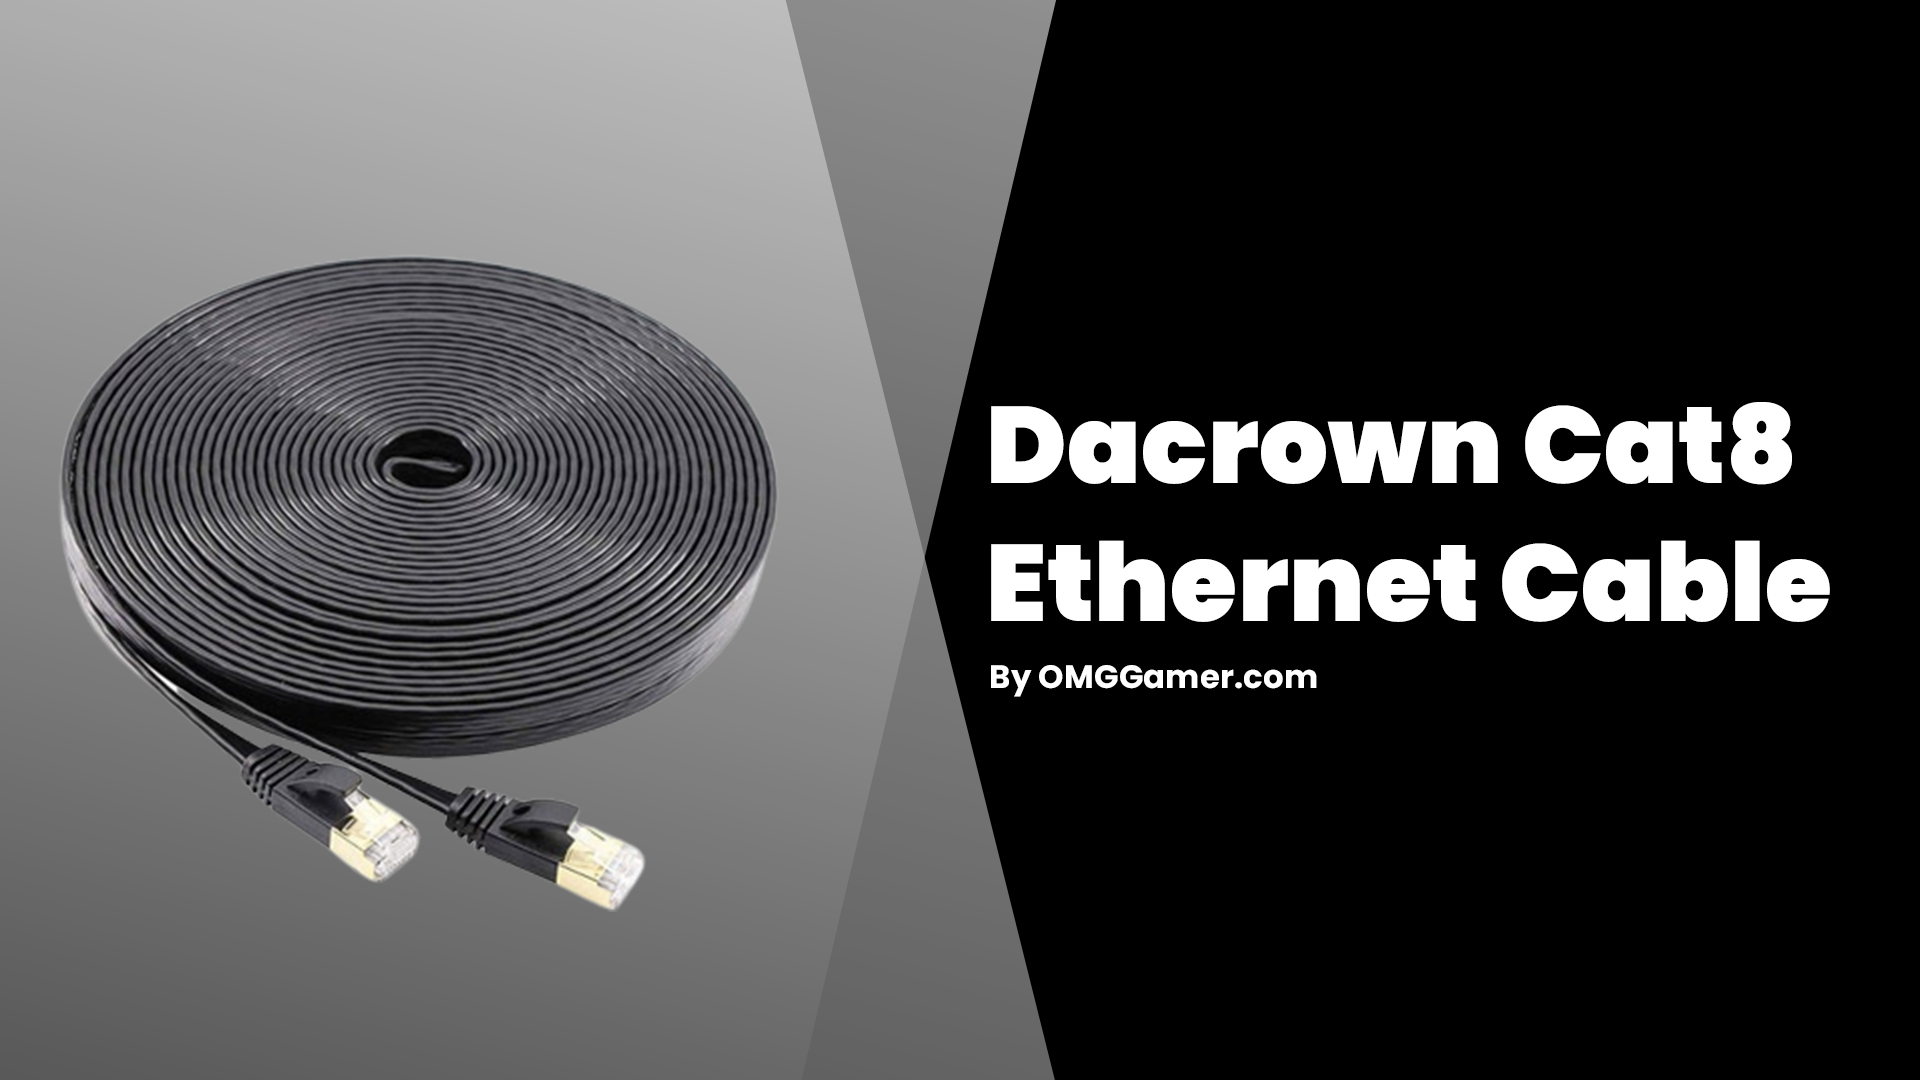 Dacrown Cat8 Ethernet Cable